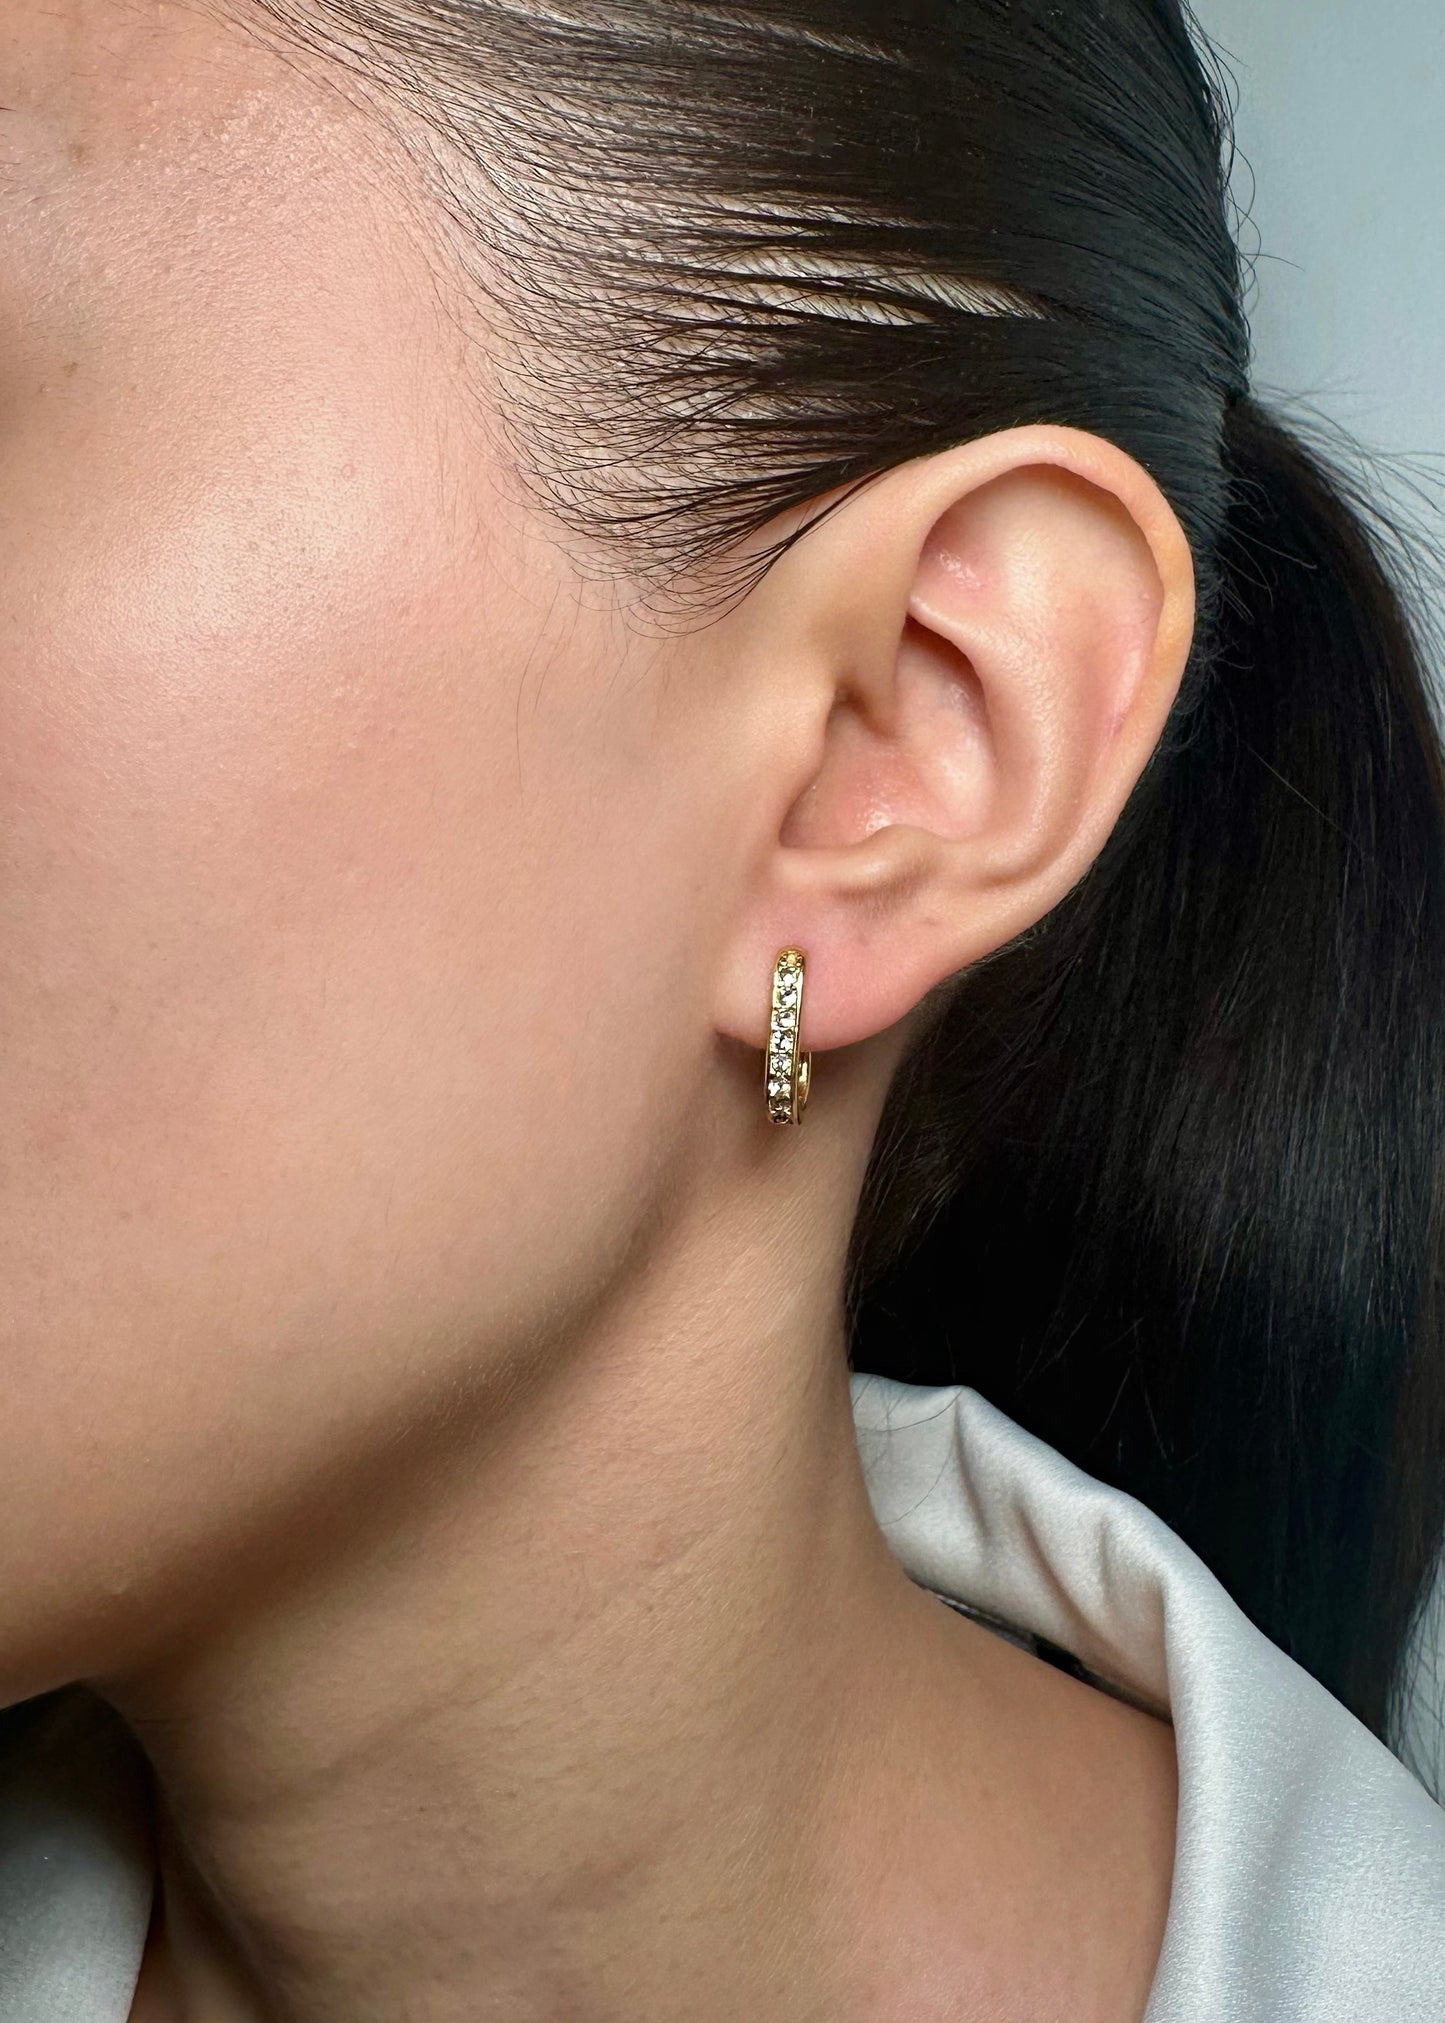 ROSE earrings